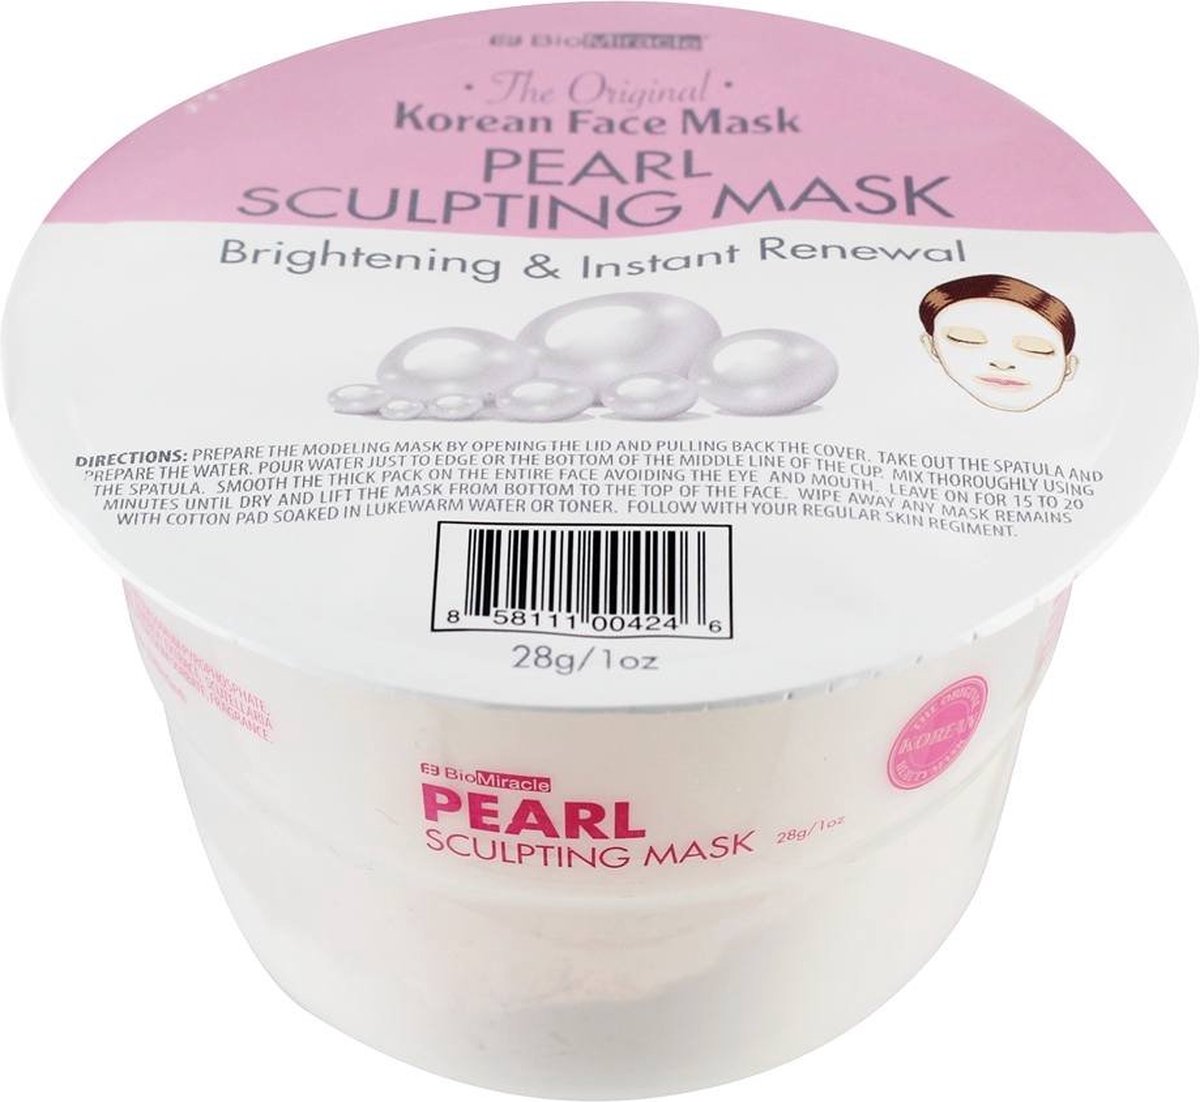 Gezichtsmasker - BioMiracle - Pearl Sculpting Face Mask - Origineel Koreaanse Gezichtsmasker - Brightening & Instant Renewal - Poeder